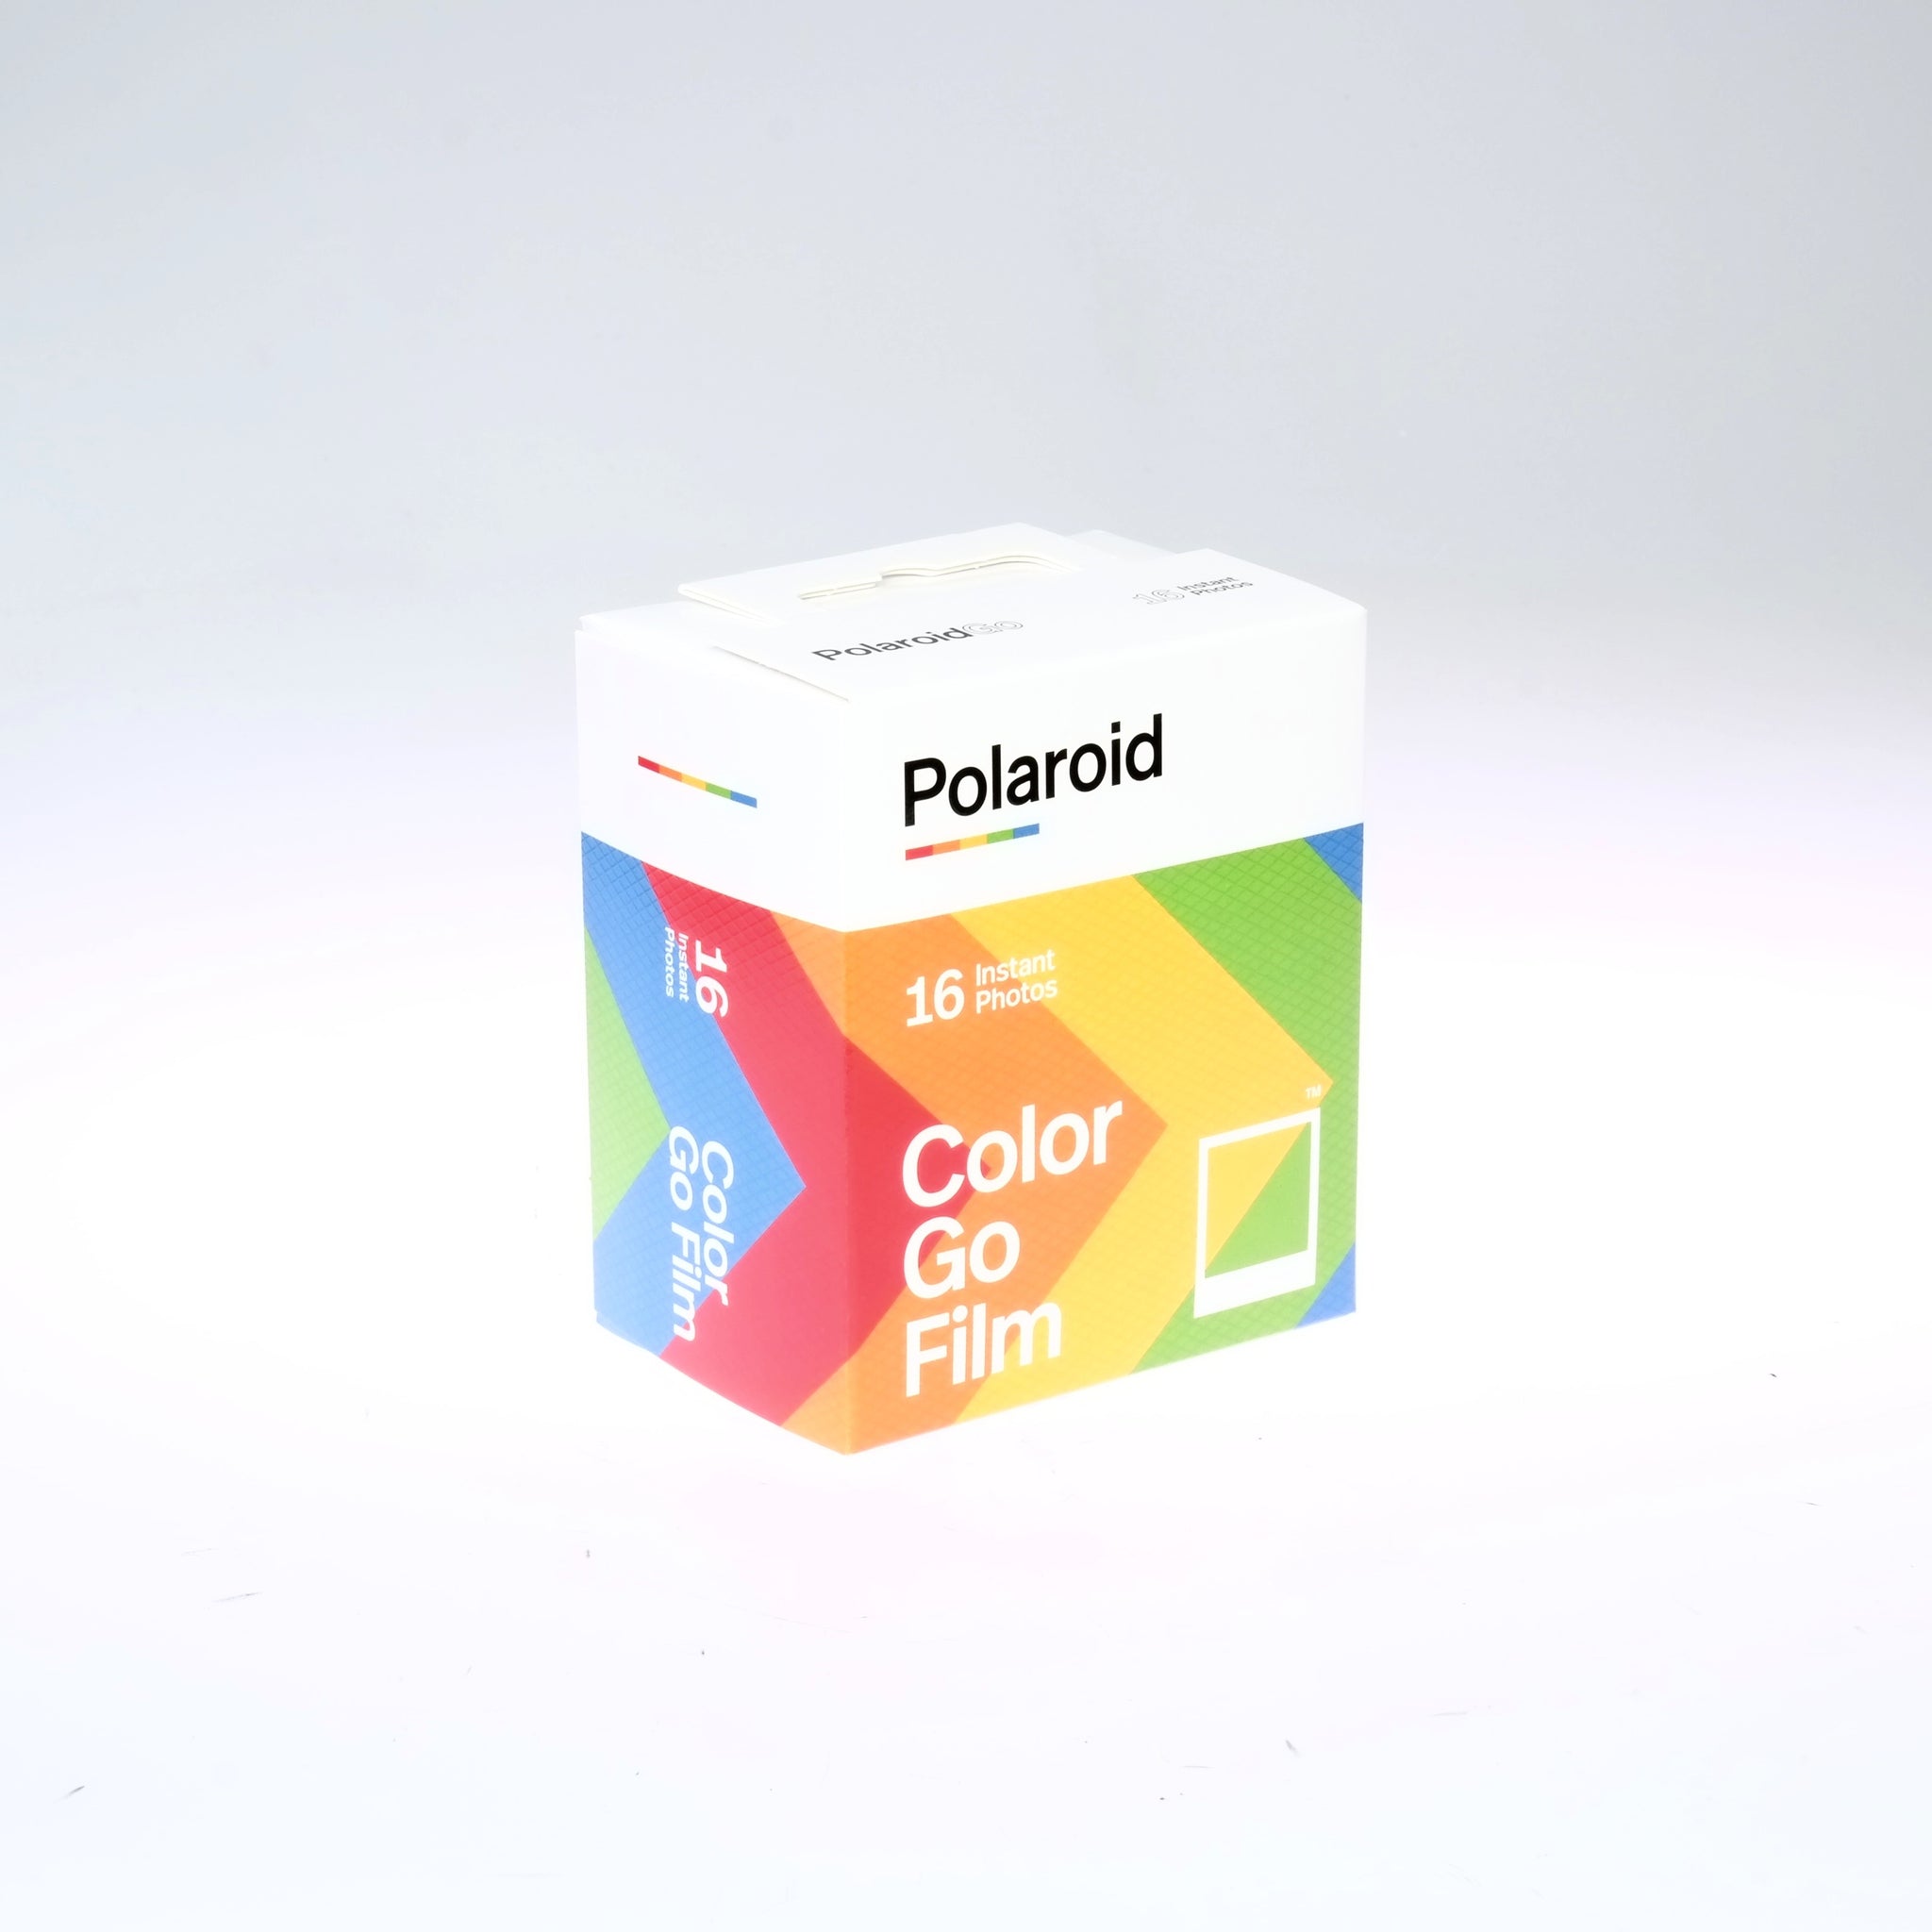 Polaroid Go Film 16 Instant Photos